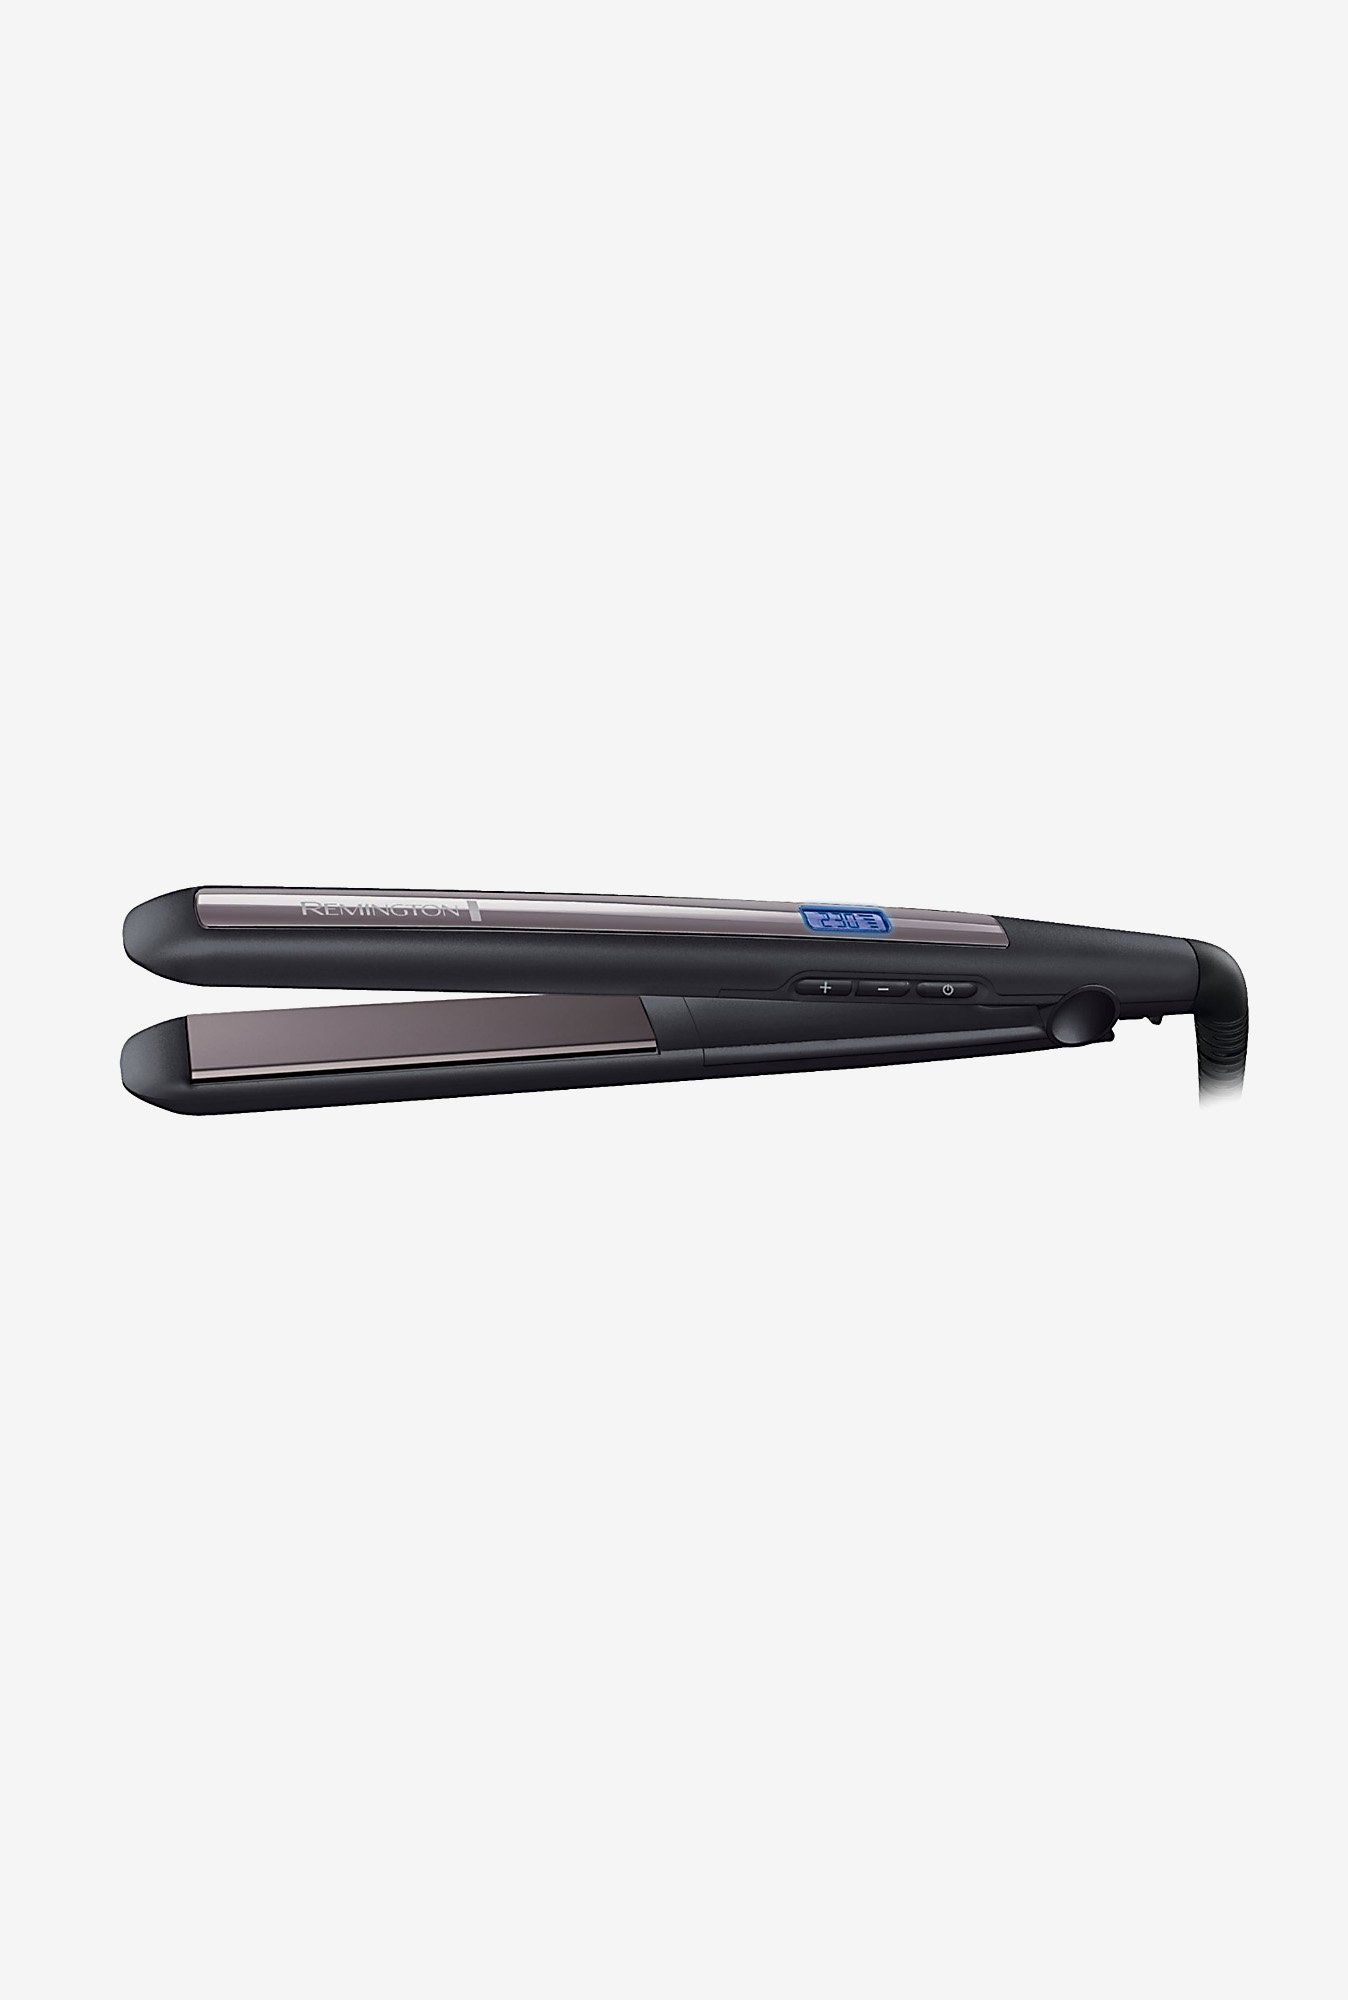 Buy Remington Pro Ceramic S5505 Hair Straightener (Black) Online at best  price at TataCLiQ